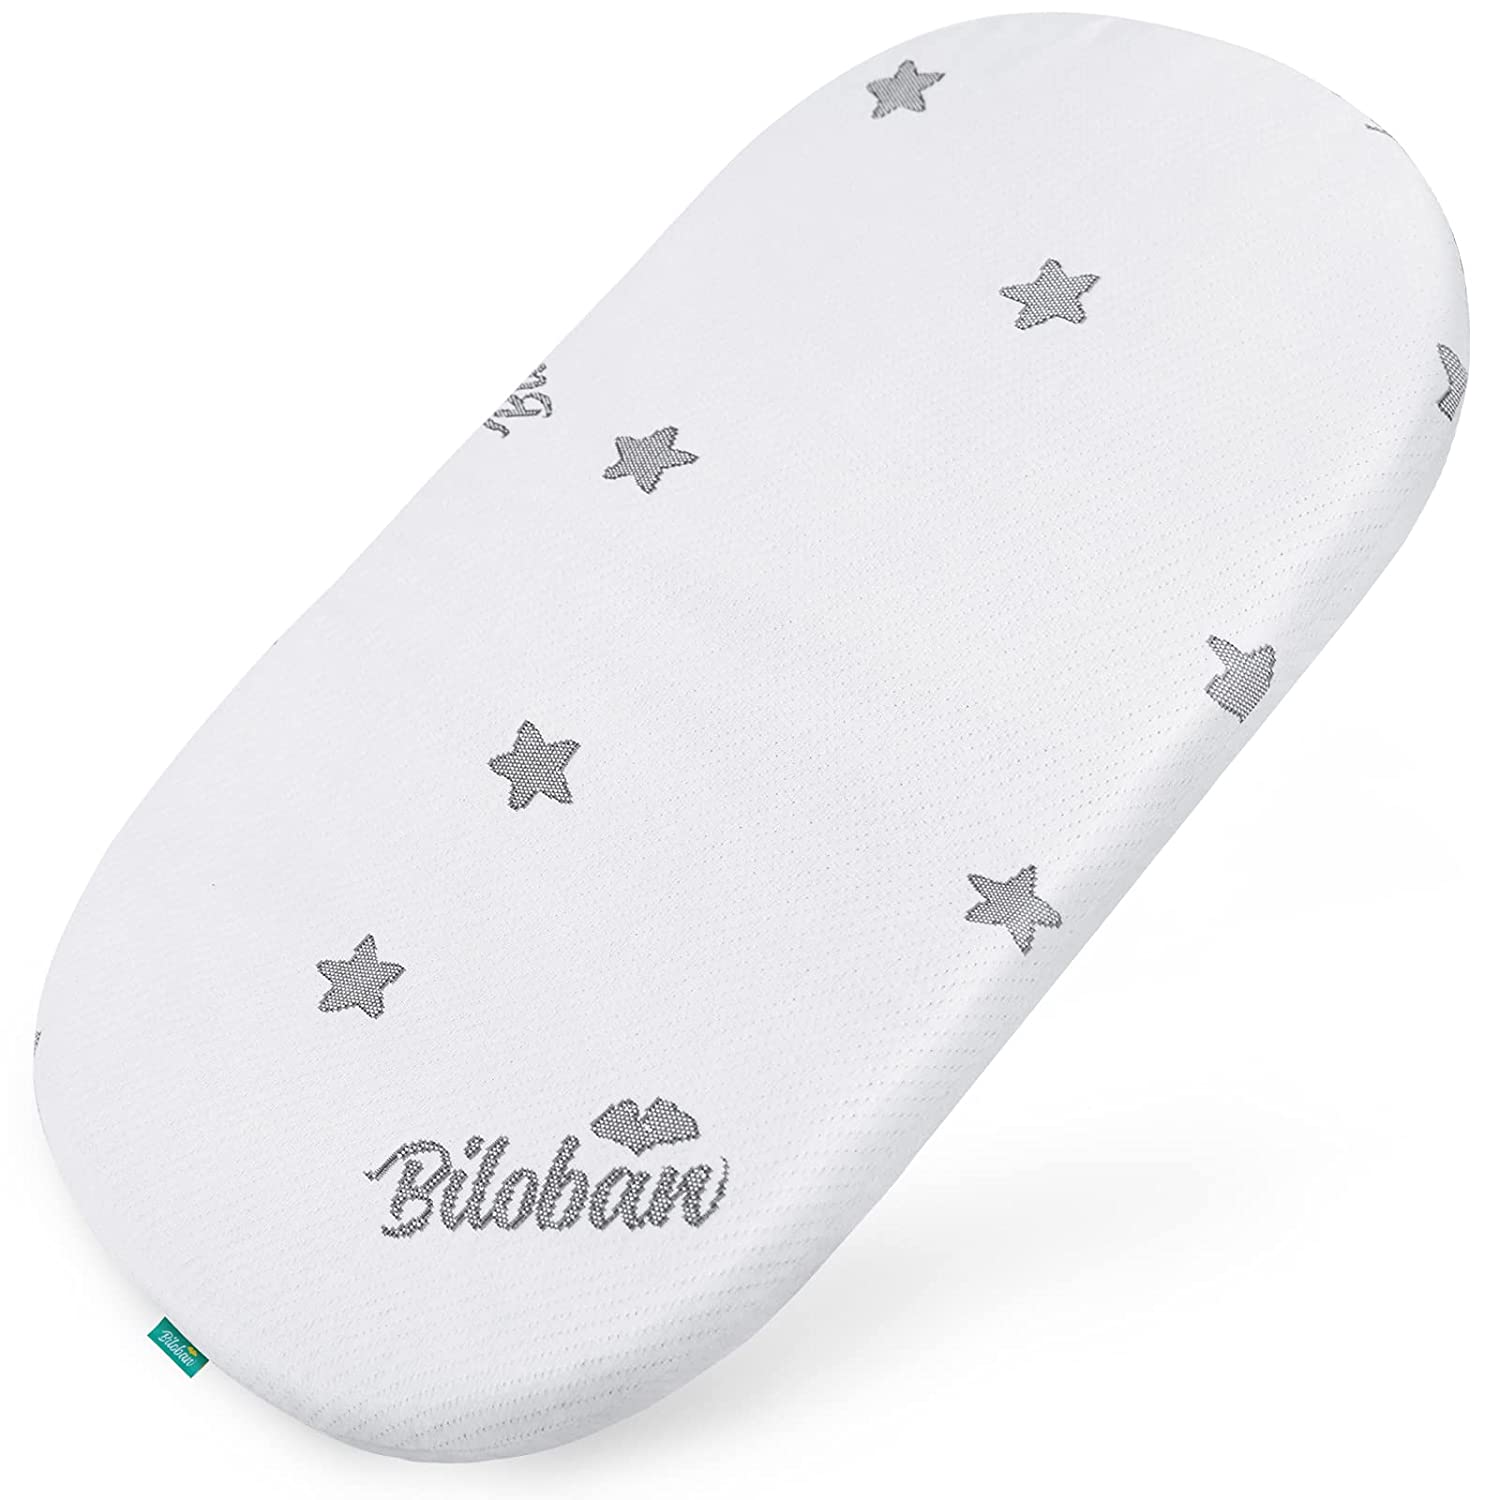 Bassinet Mattress with Waterproof & Breathable Cover, Fits SNOO Smart Sleeper Baby Bassinet - Biloban Online Store